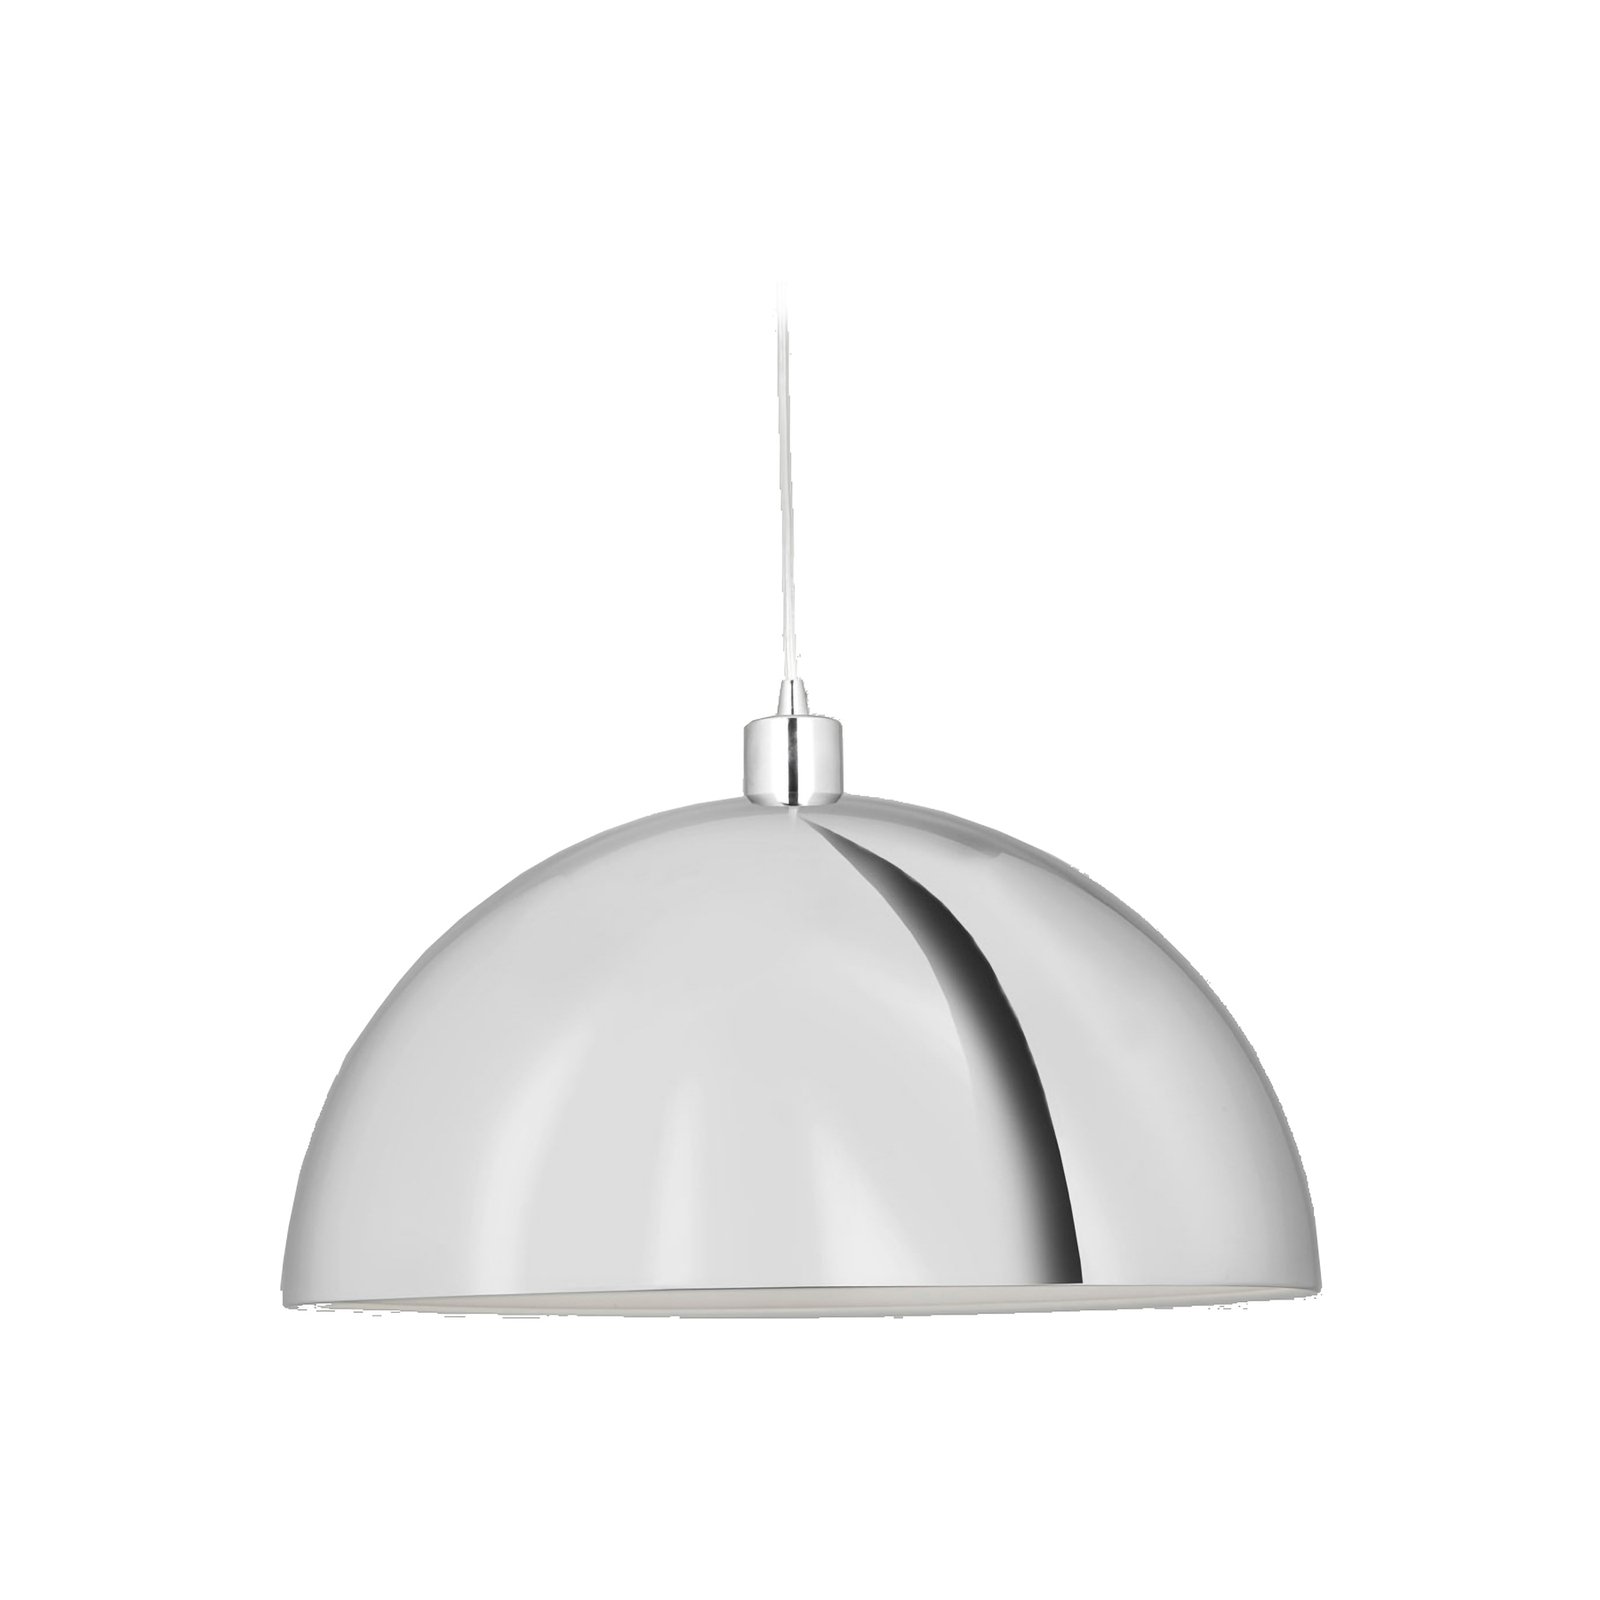 Aluminor Dome -riippuvalaisin, Ø50 cm, kromi